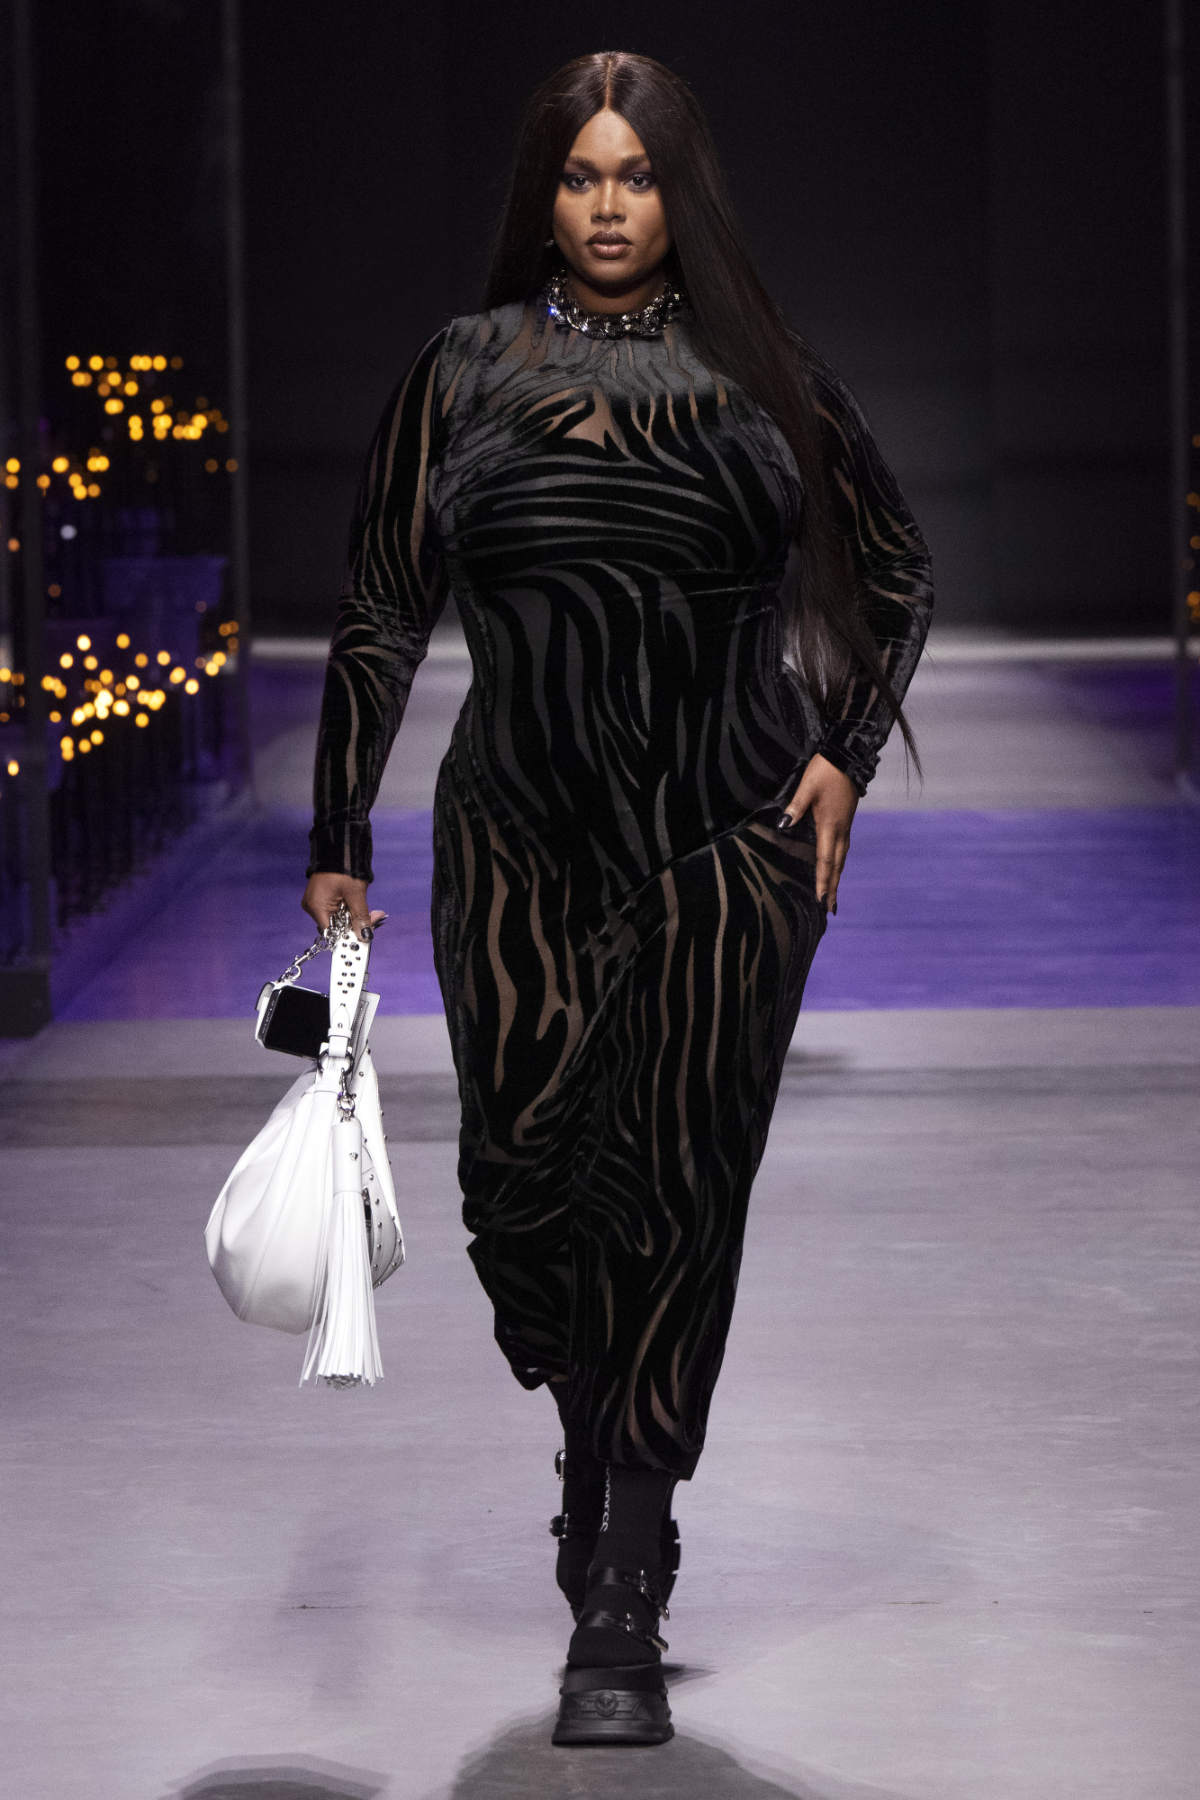 Versace Presents Its New Spring-Summer 2023 Women’s Collection: Dark Gothic Goddess